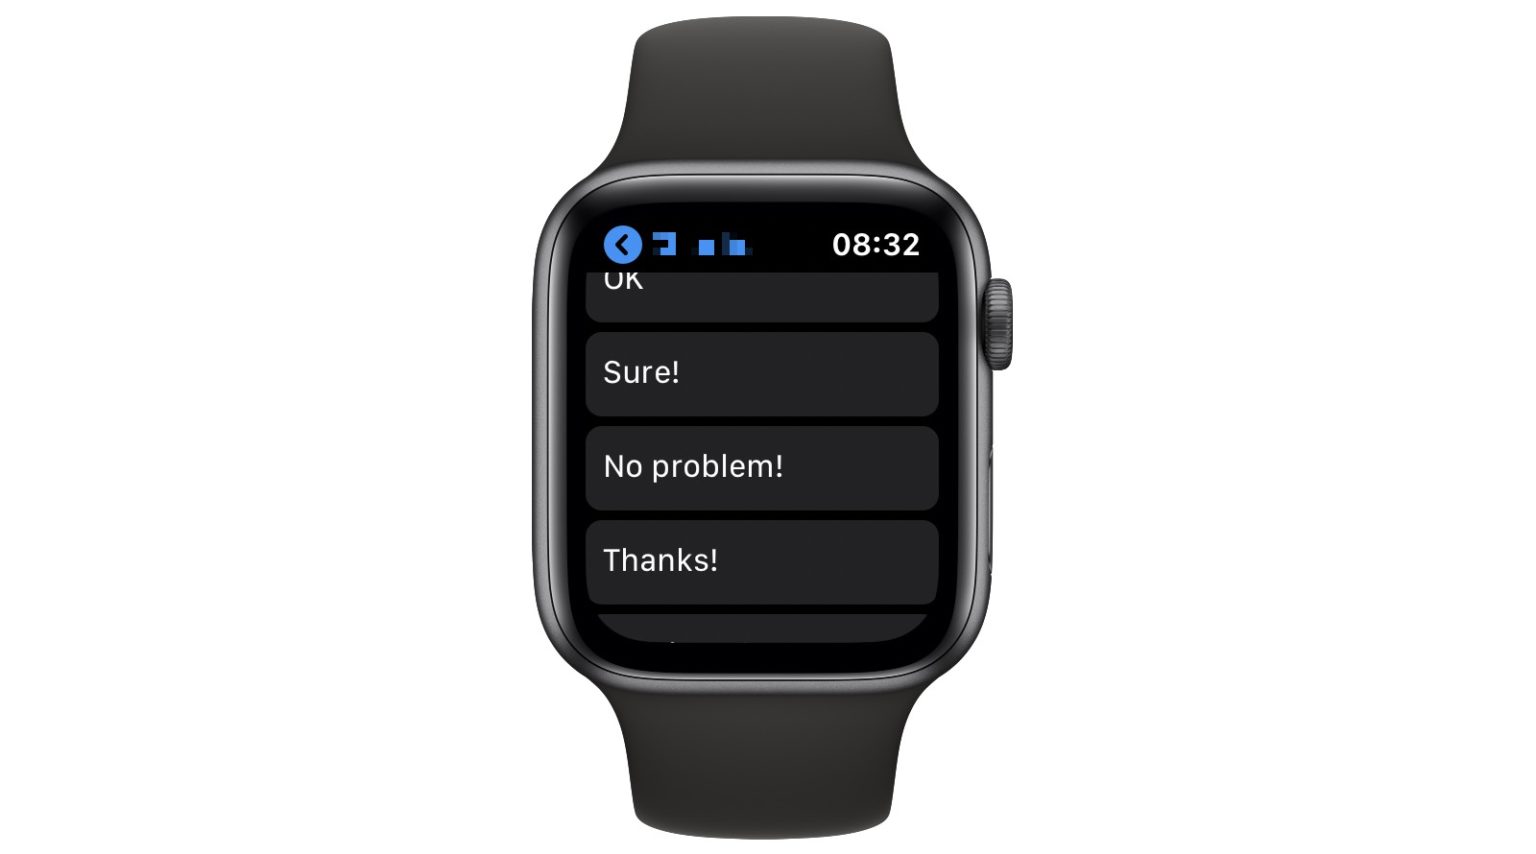 Change the lame Apple Watch smart replies by adding custom replies.